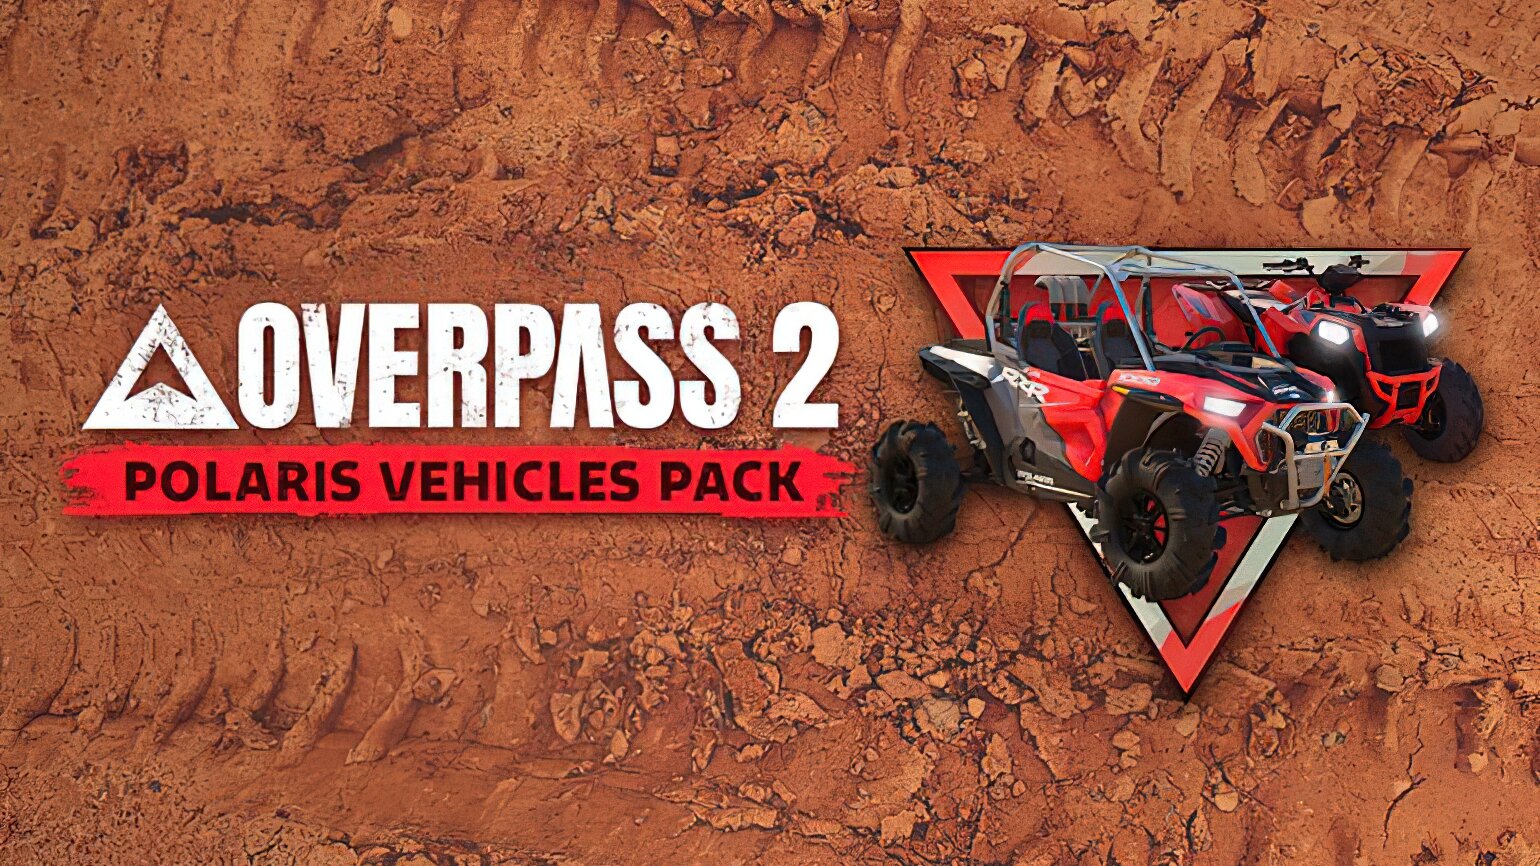 Overpass 2 - Polaris vehicles pack